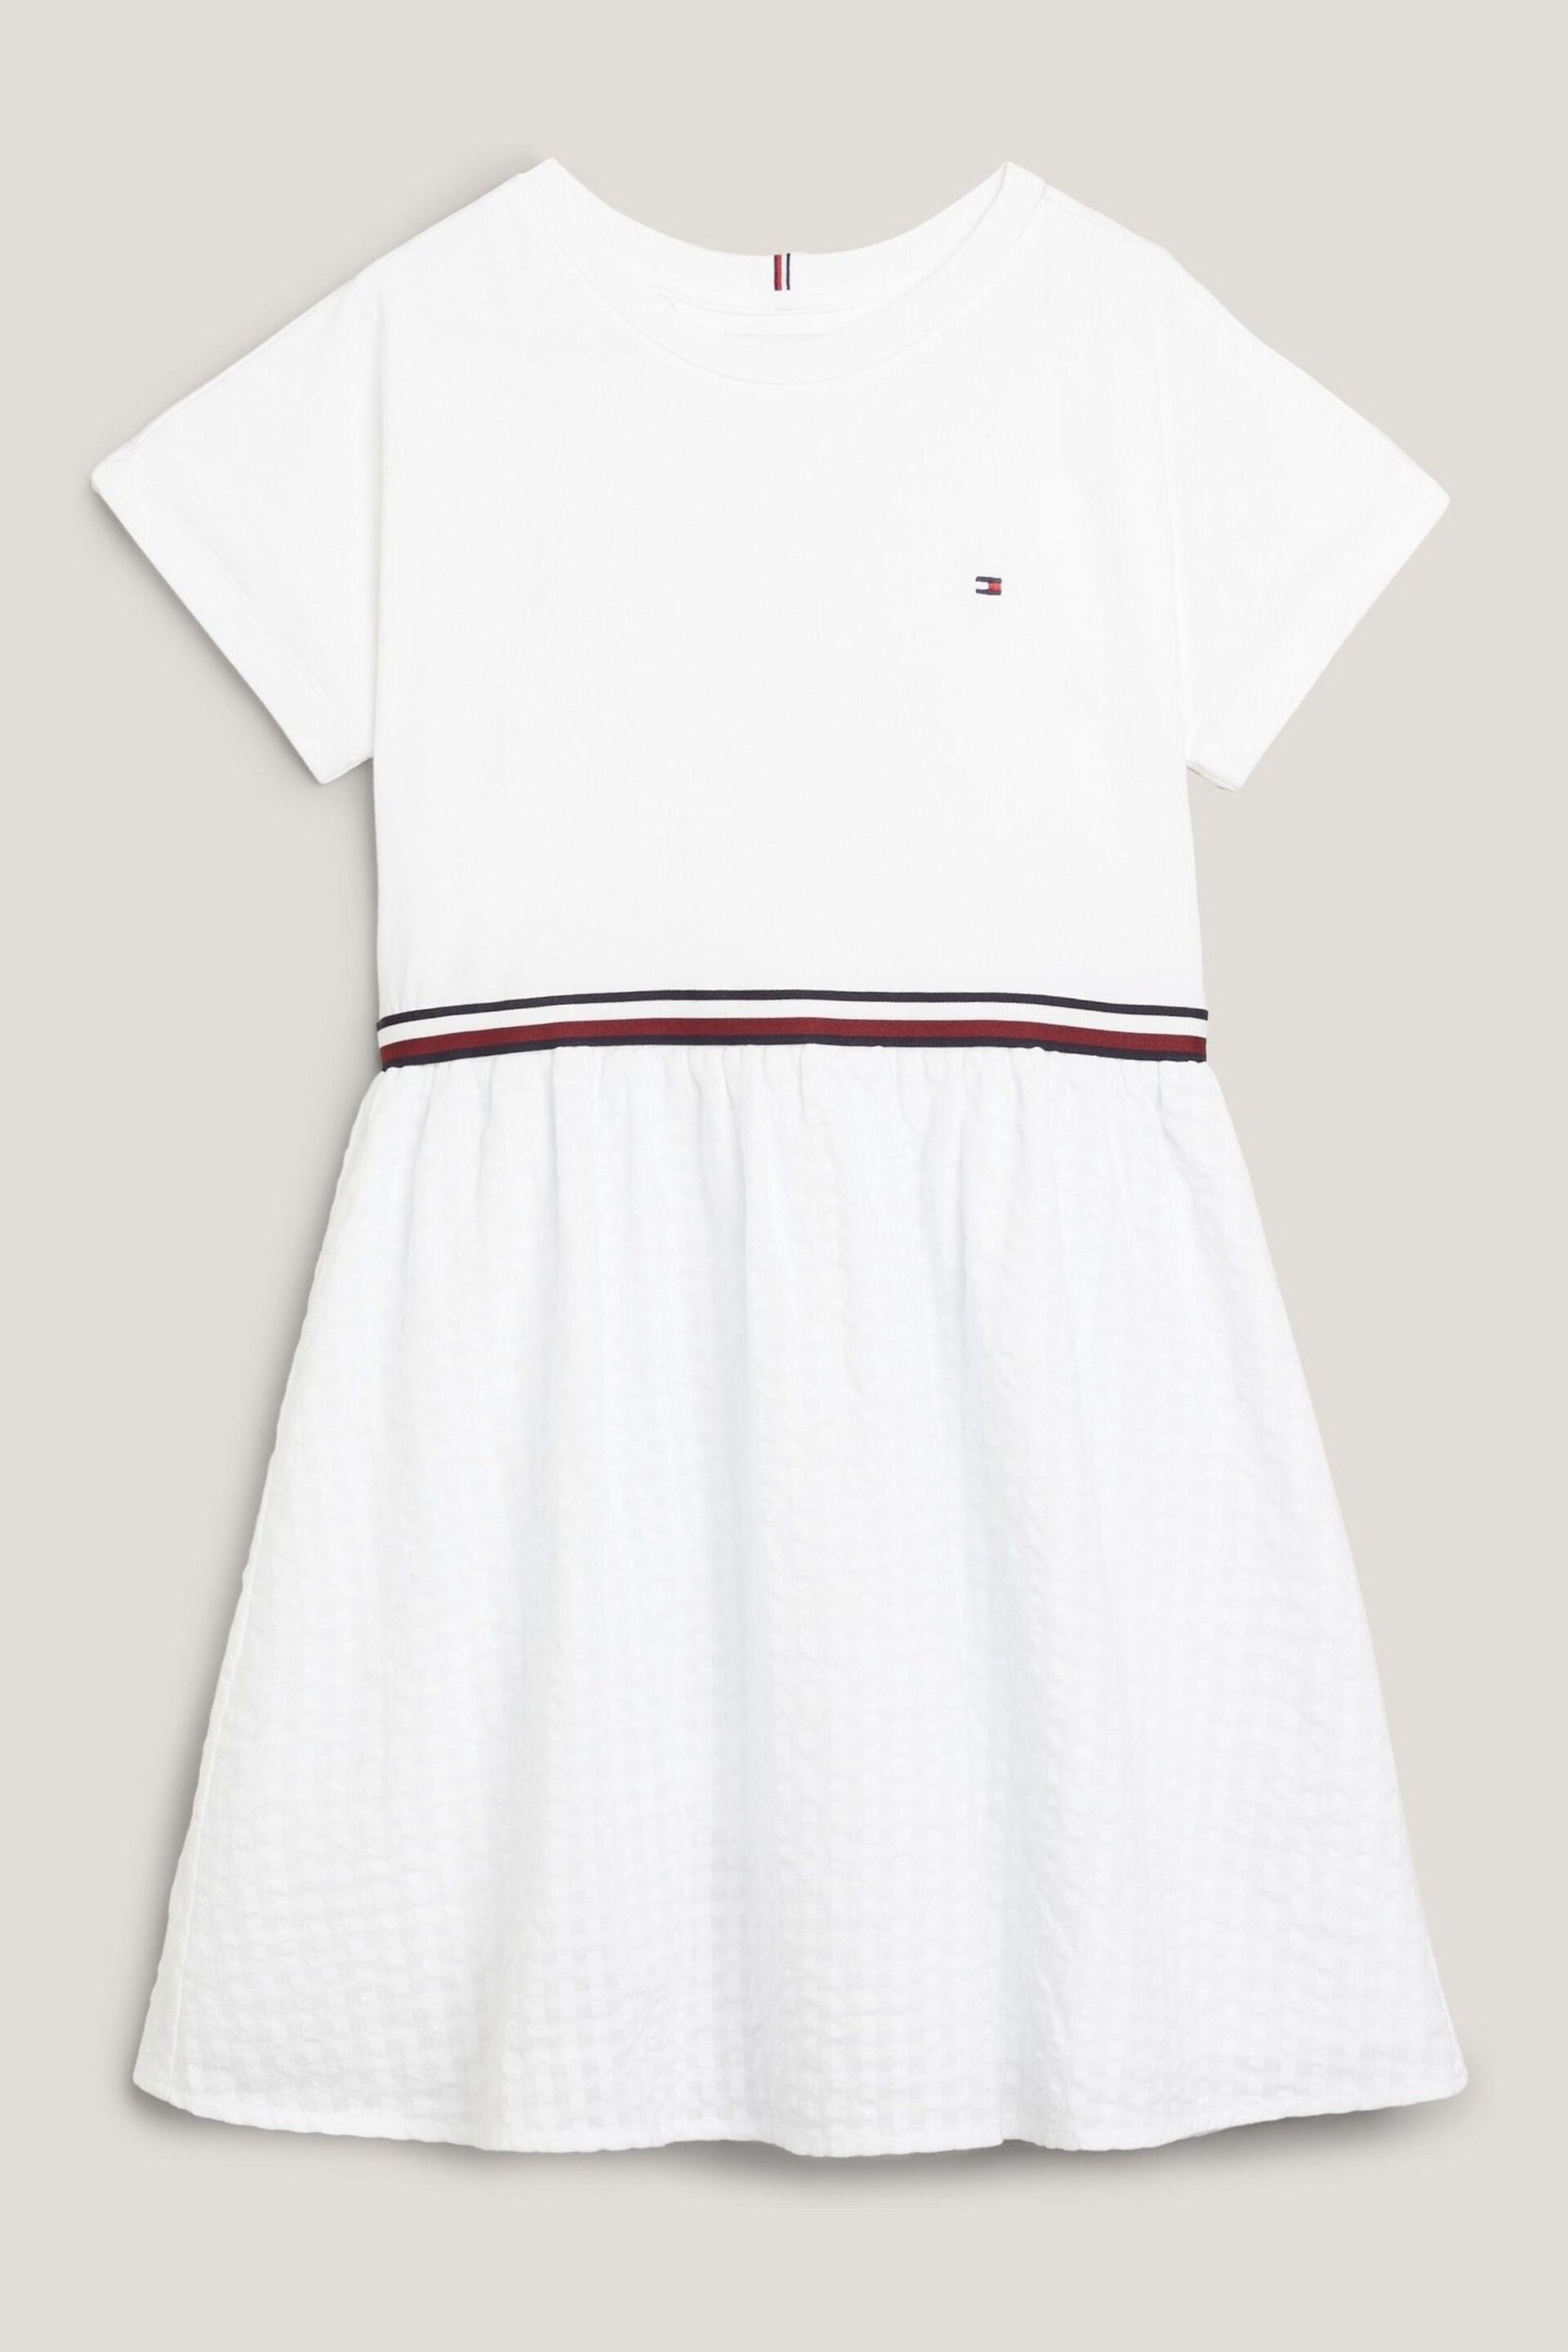 Tommy Hilfiger Girls Global Stripe White Dress - Image 5 of 5